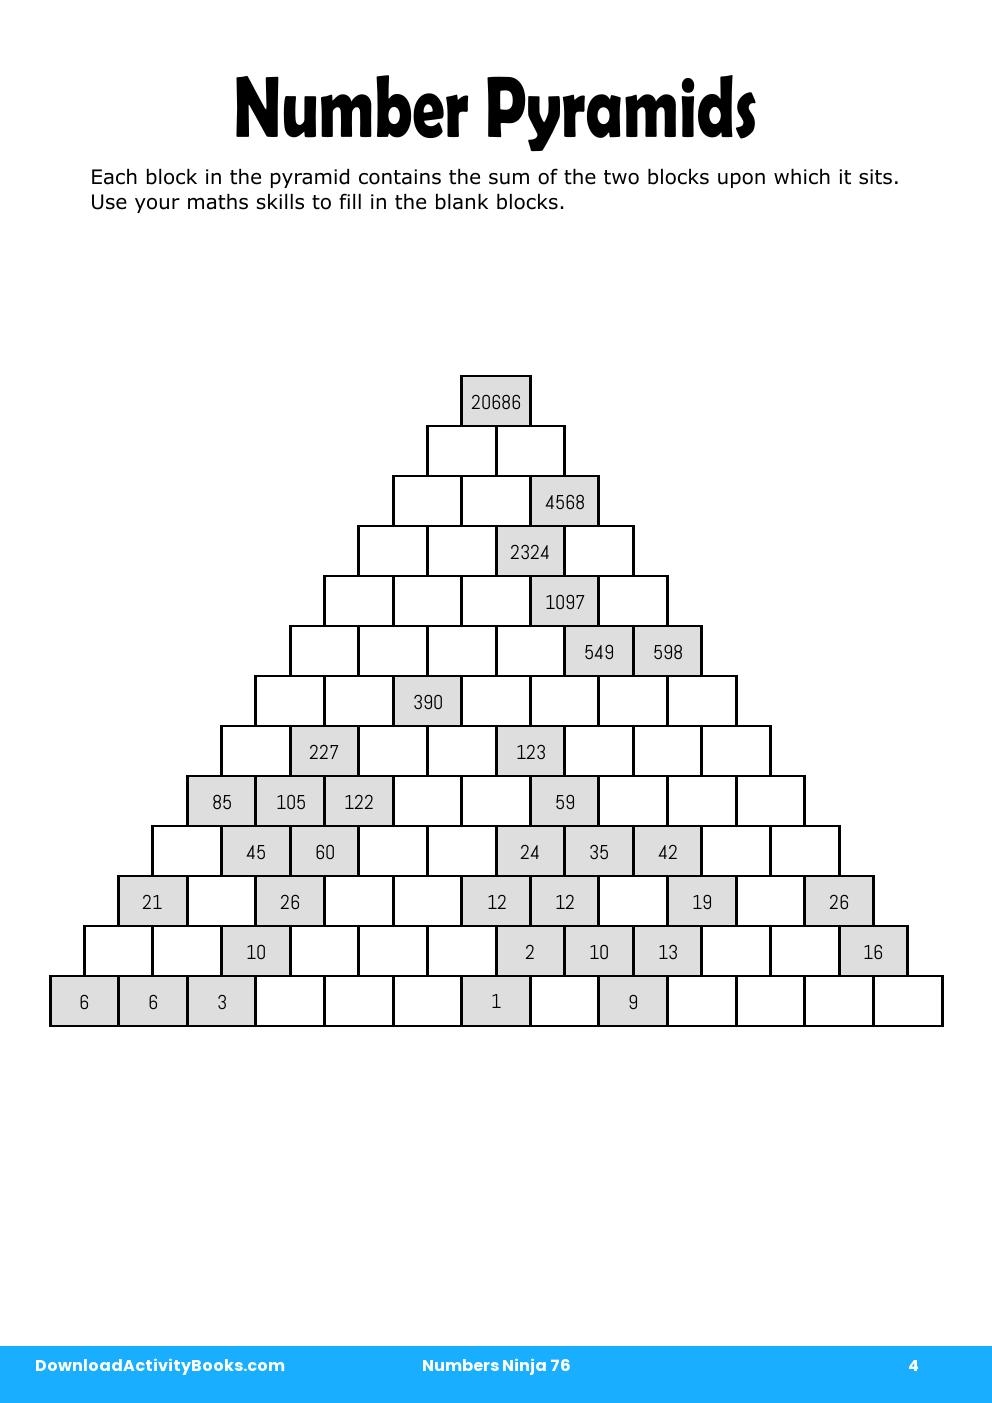 Number Pyramids in Numbers Ninja 76